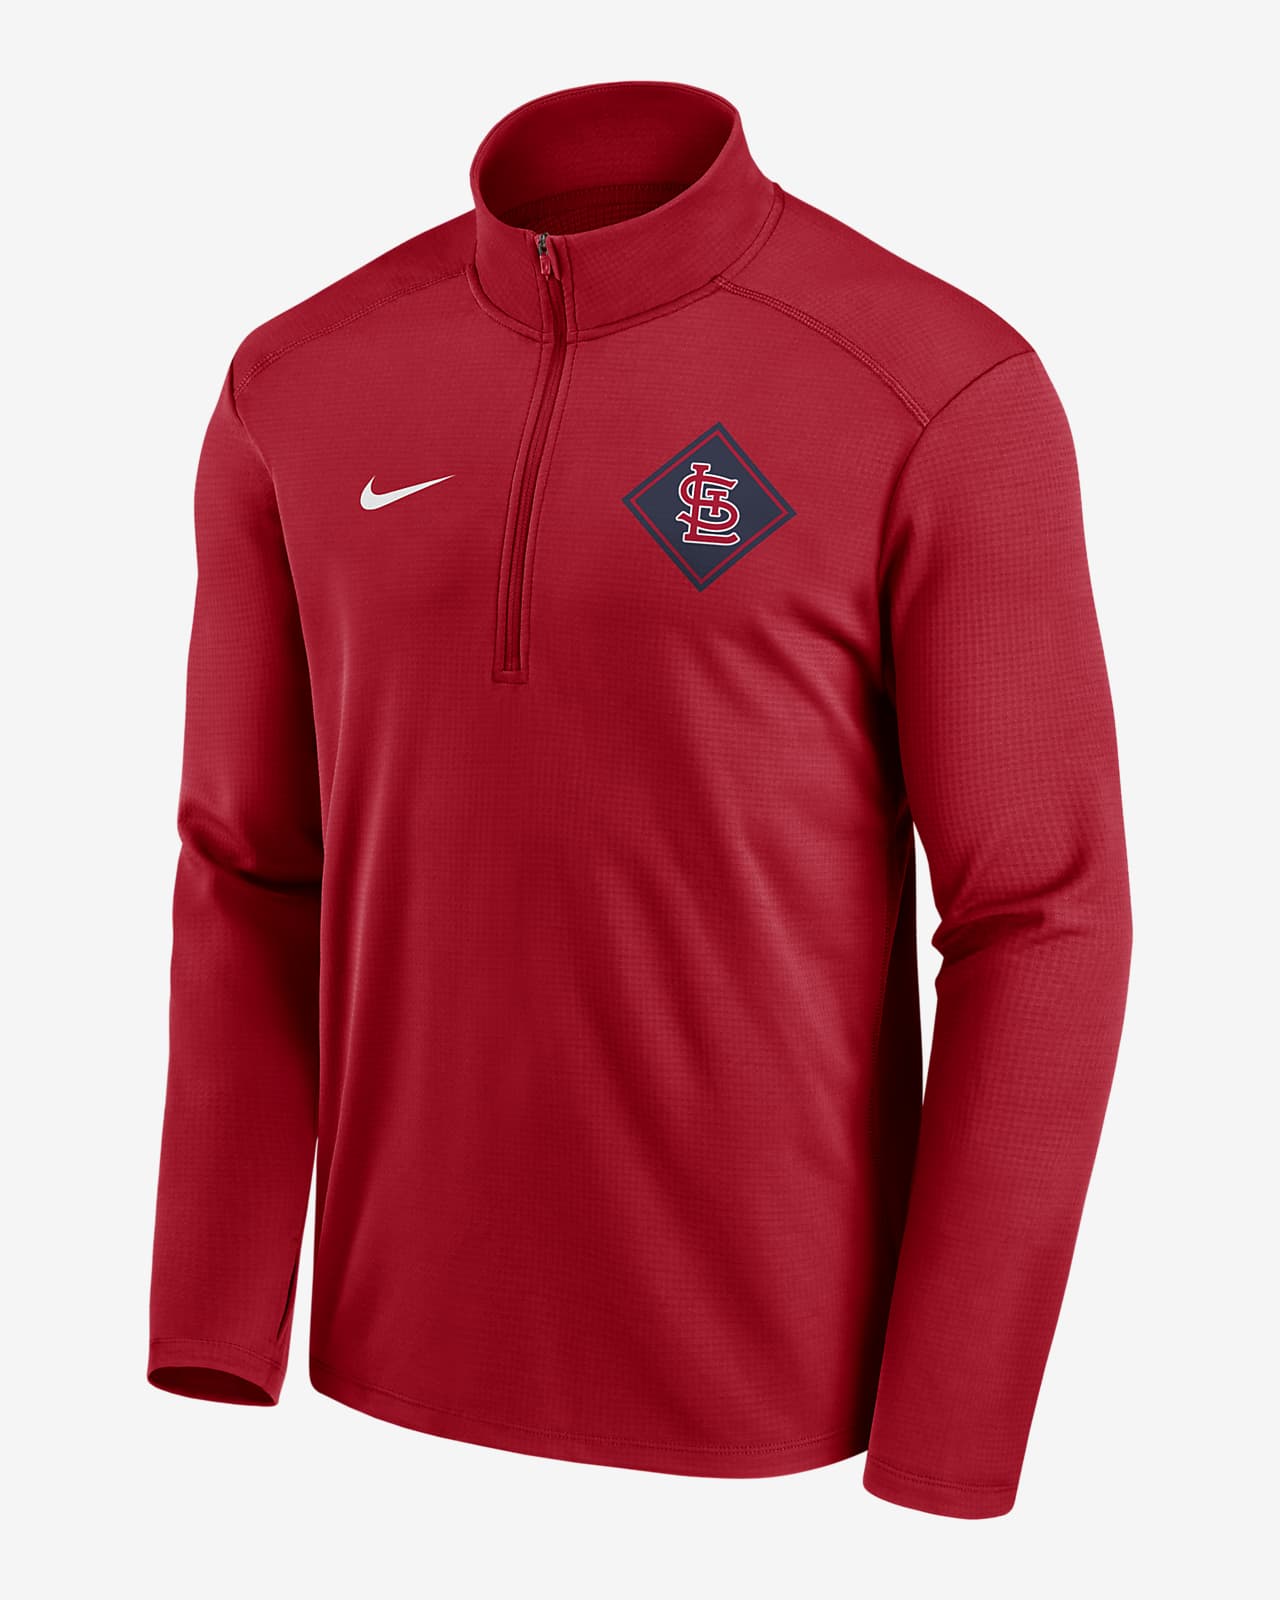 Nike, Shirts, Nike St Louis Cardinals Polo Drifit